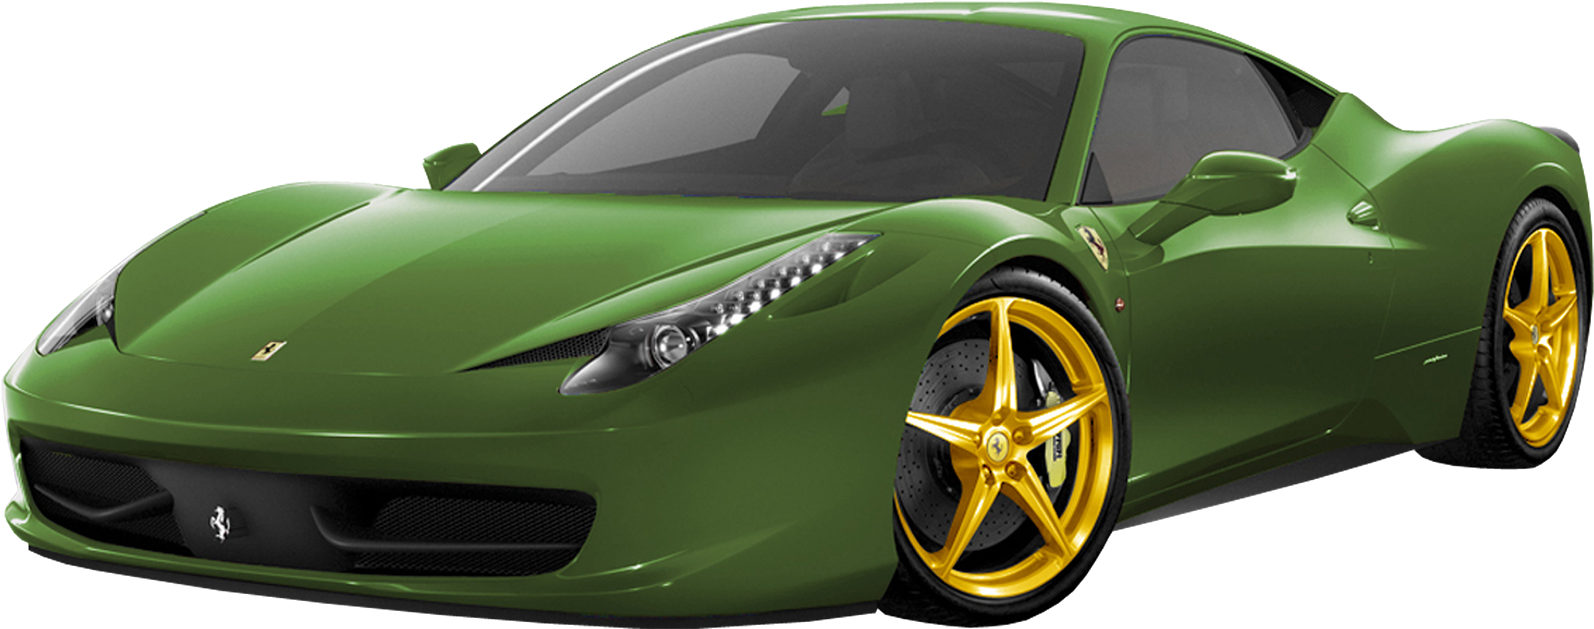 Green Ferrari Yellow Wheels